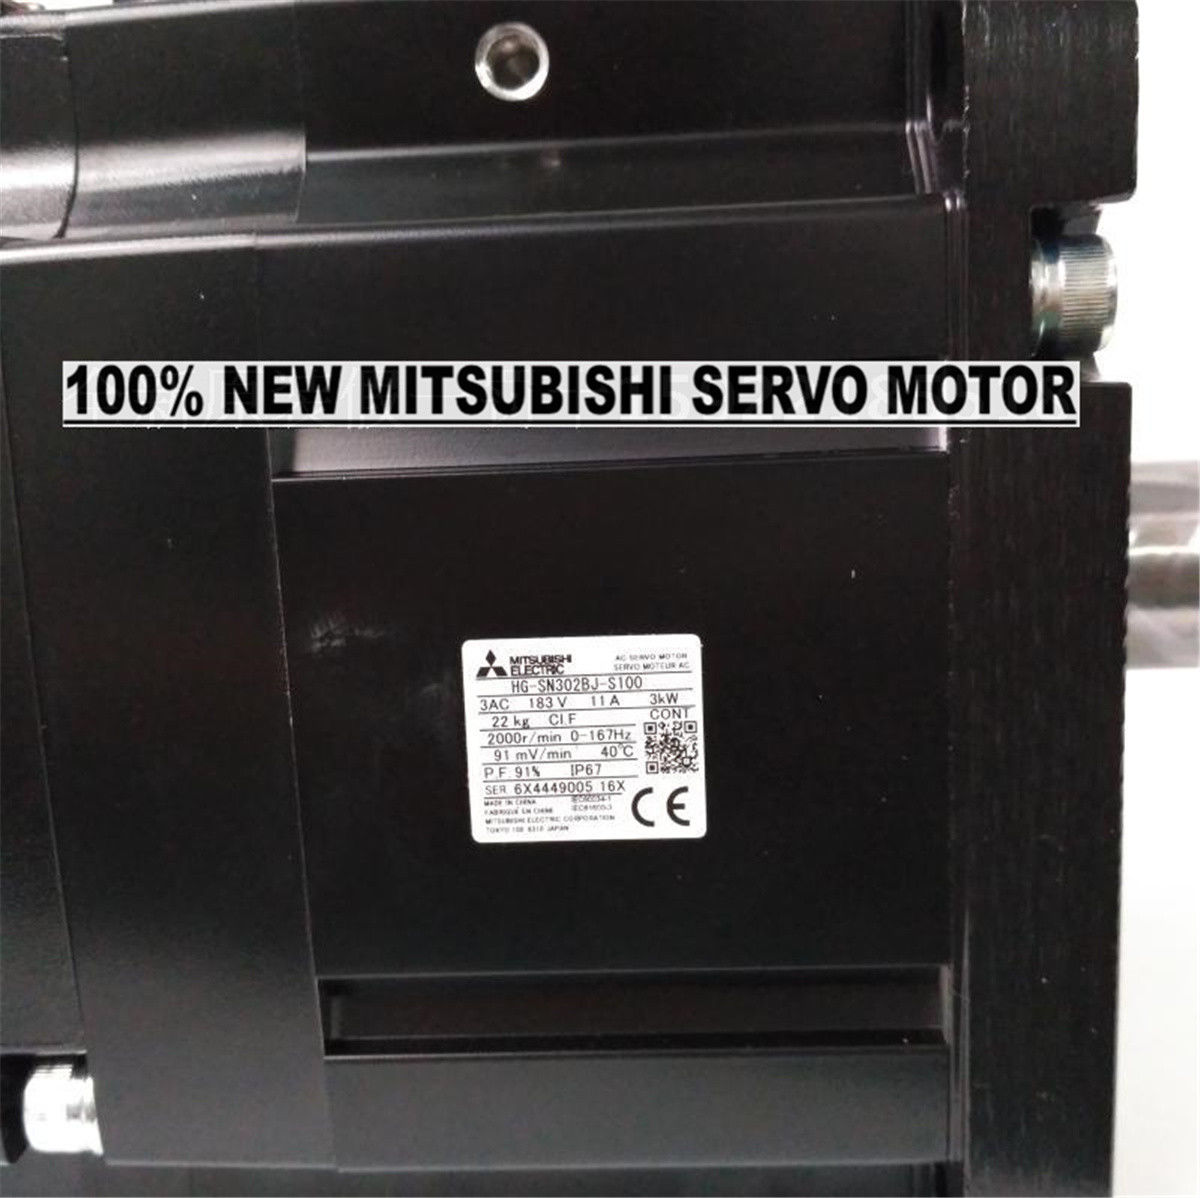 NEW Mitsubishi Servo Motor 300W HG-SN302BJ-S100 in box HGSN302BJS100 - Click Image to Close